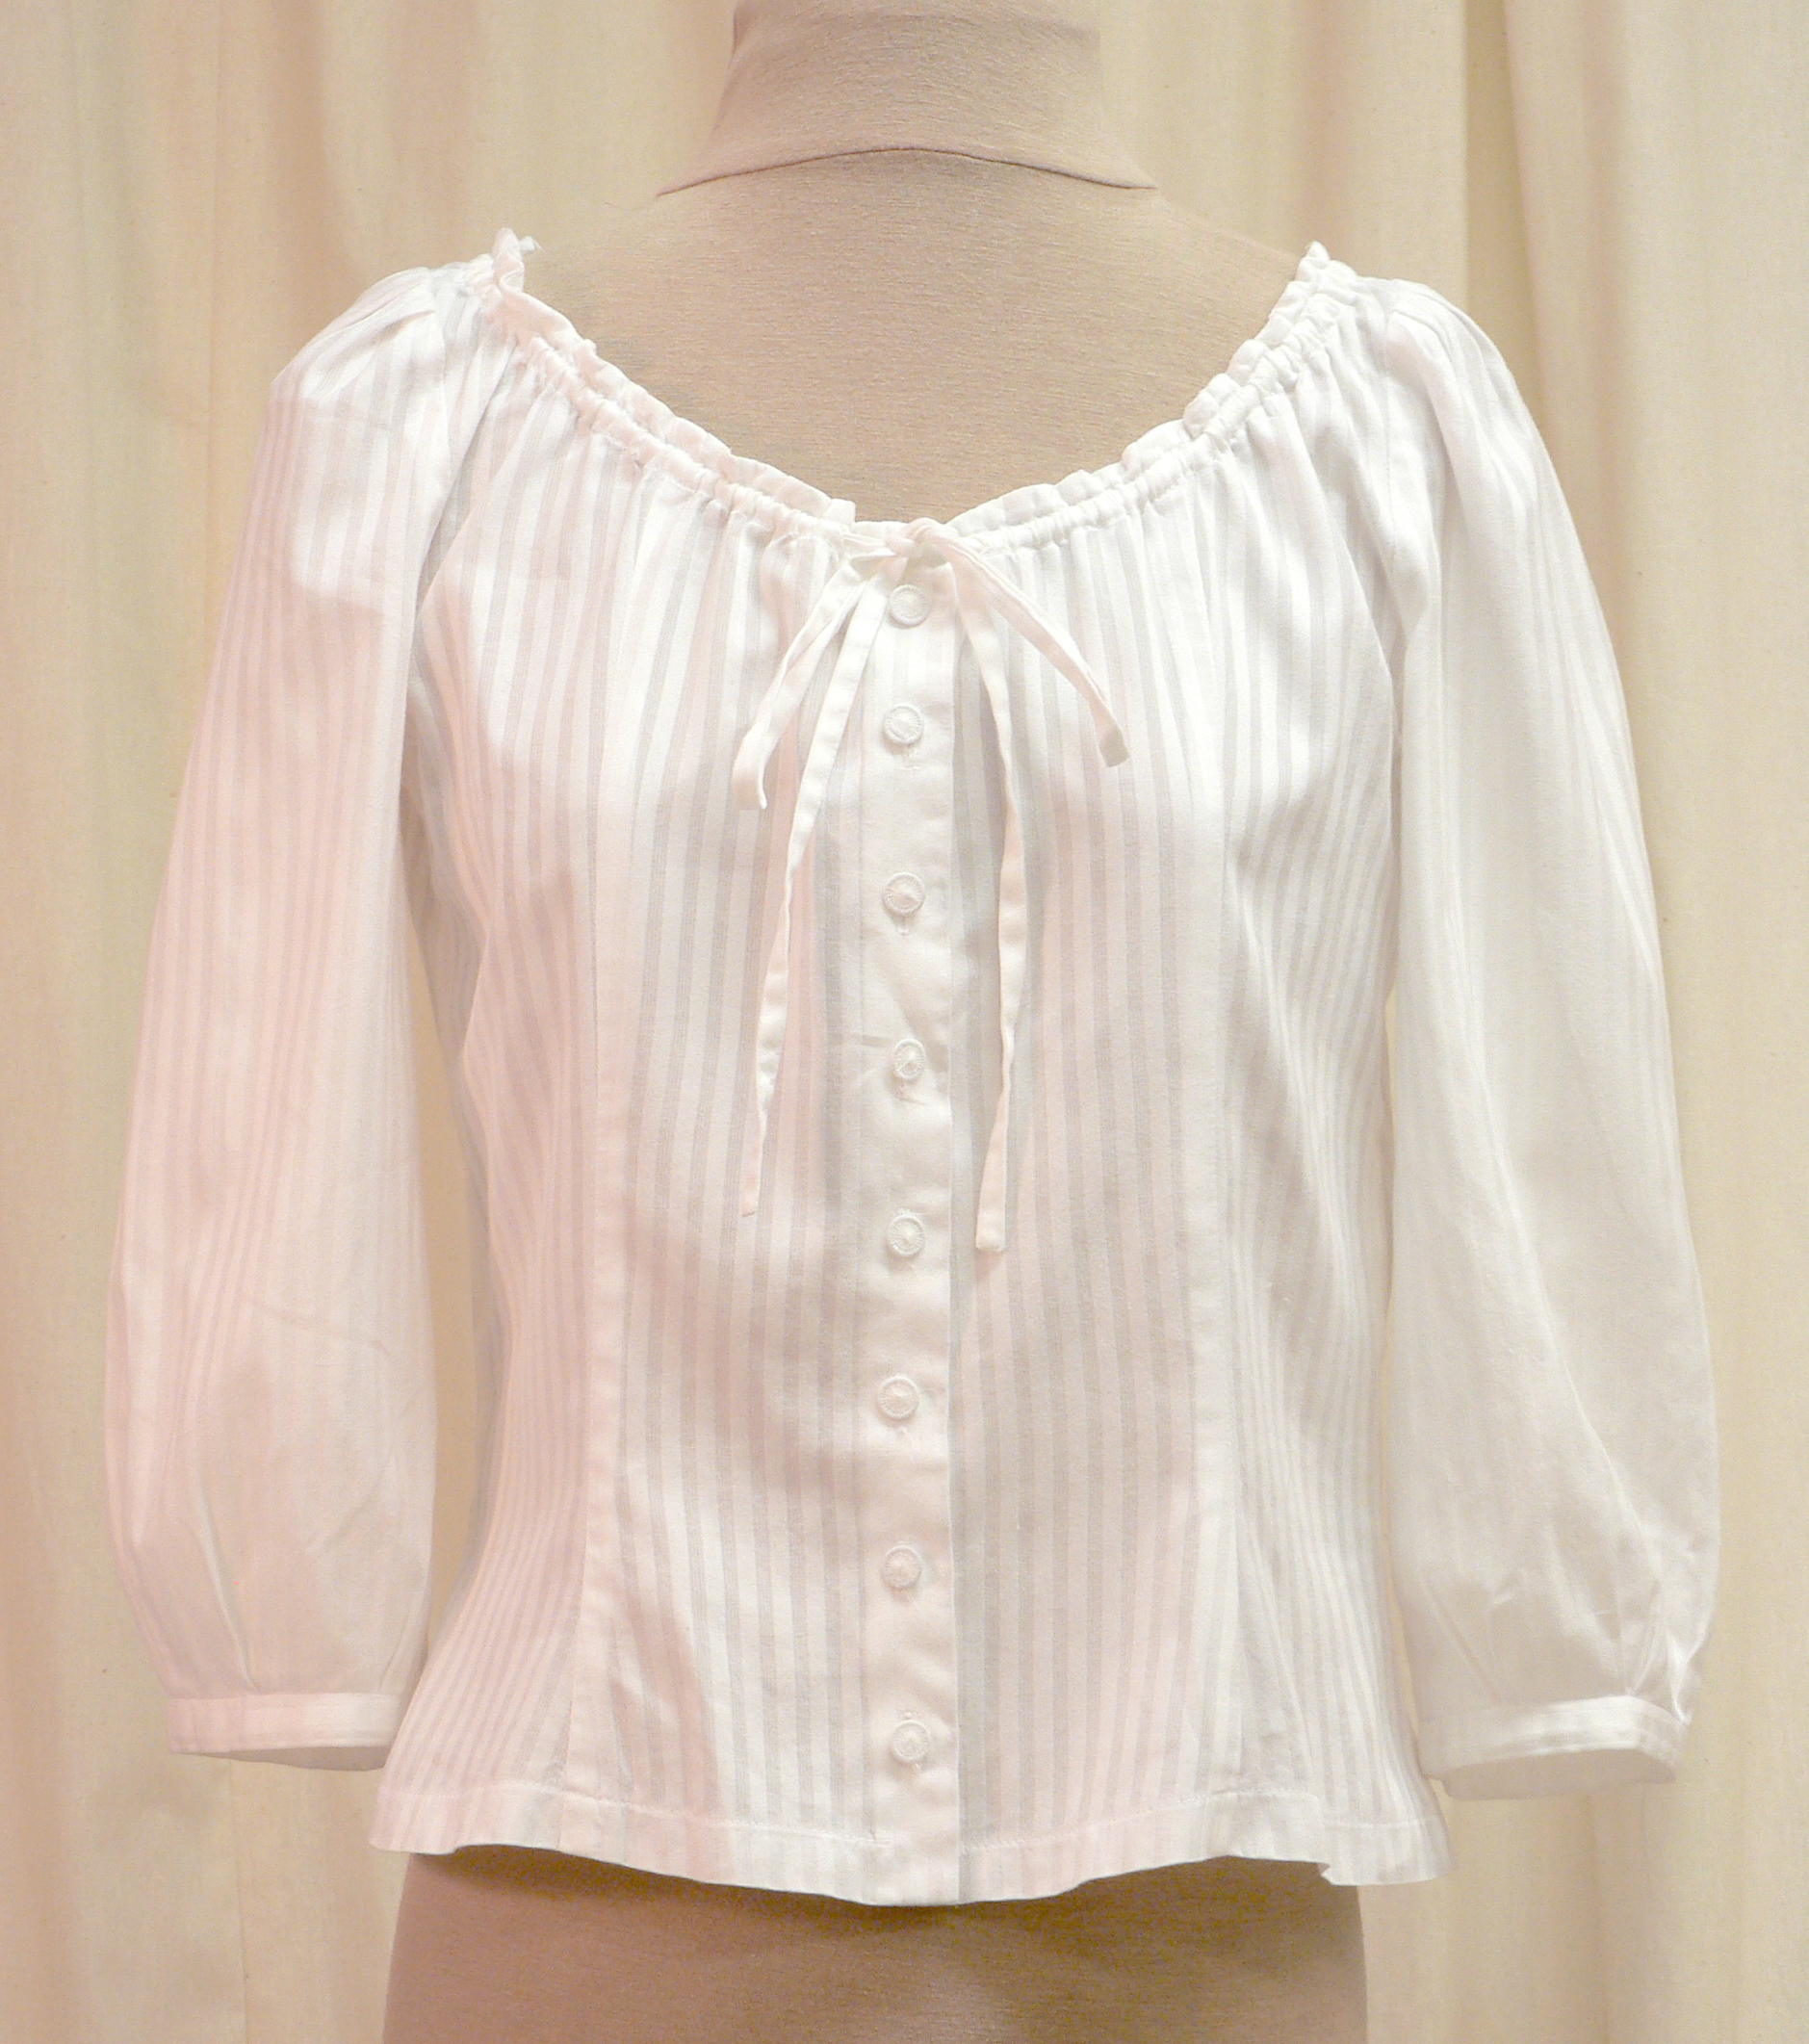 blouse07_front.jpg